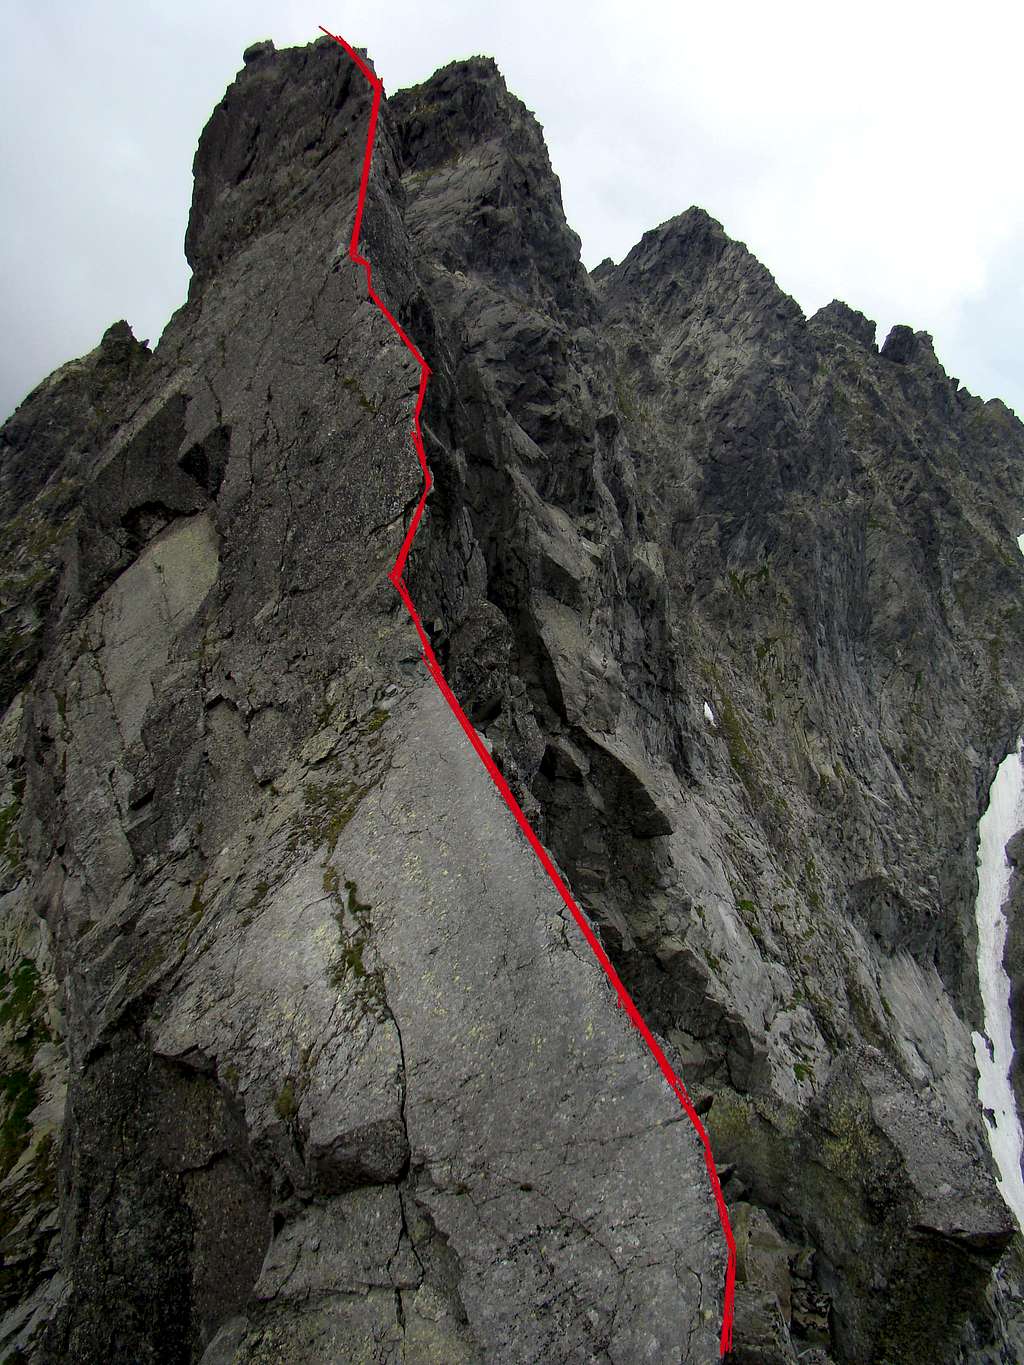 East ridge - red line